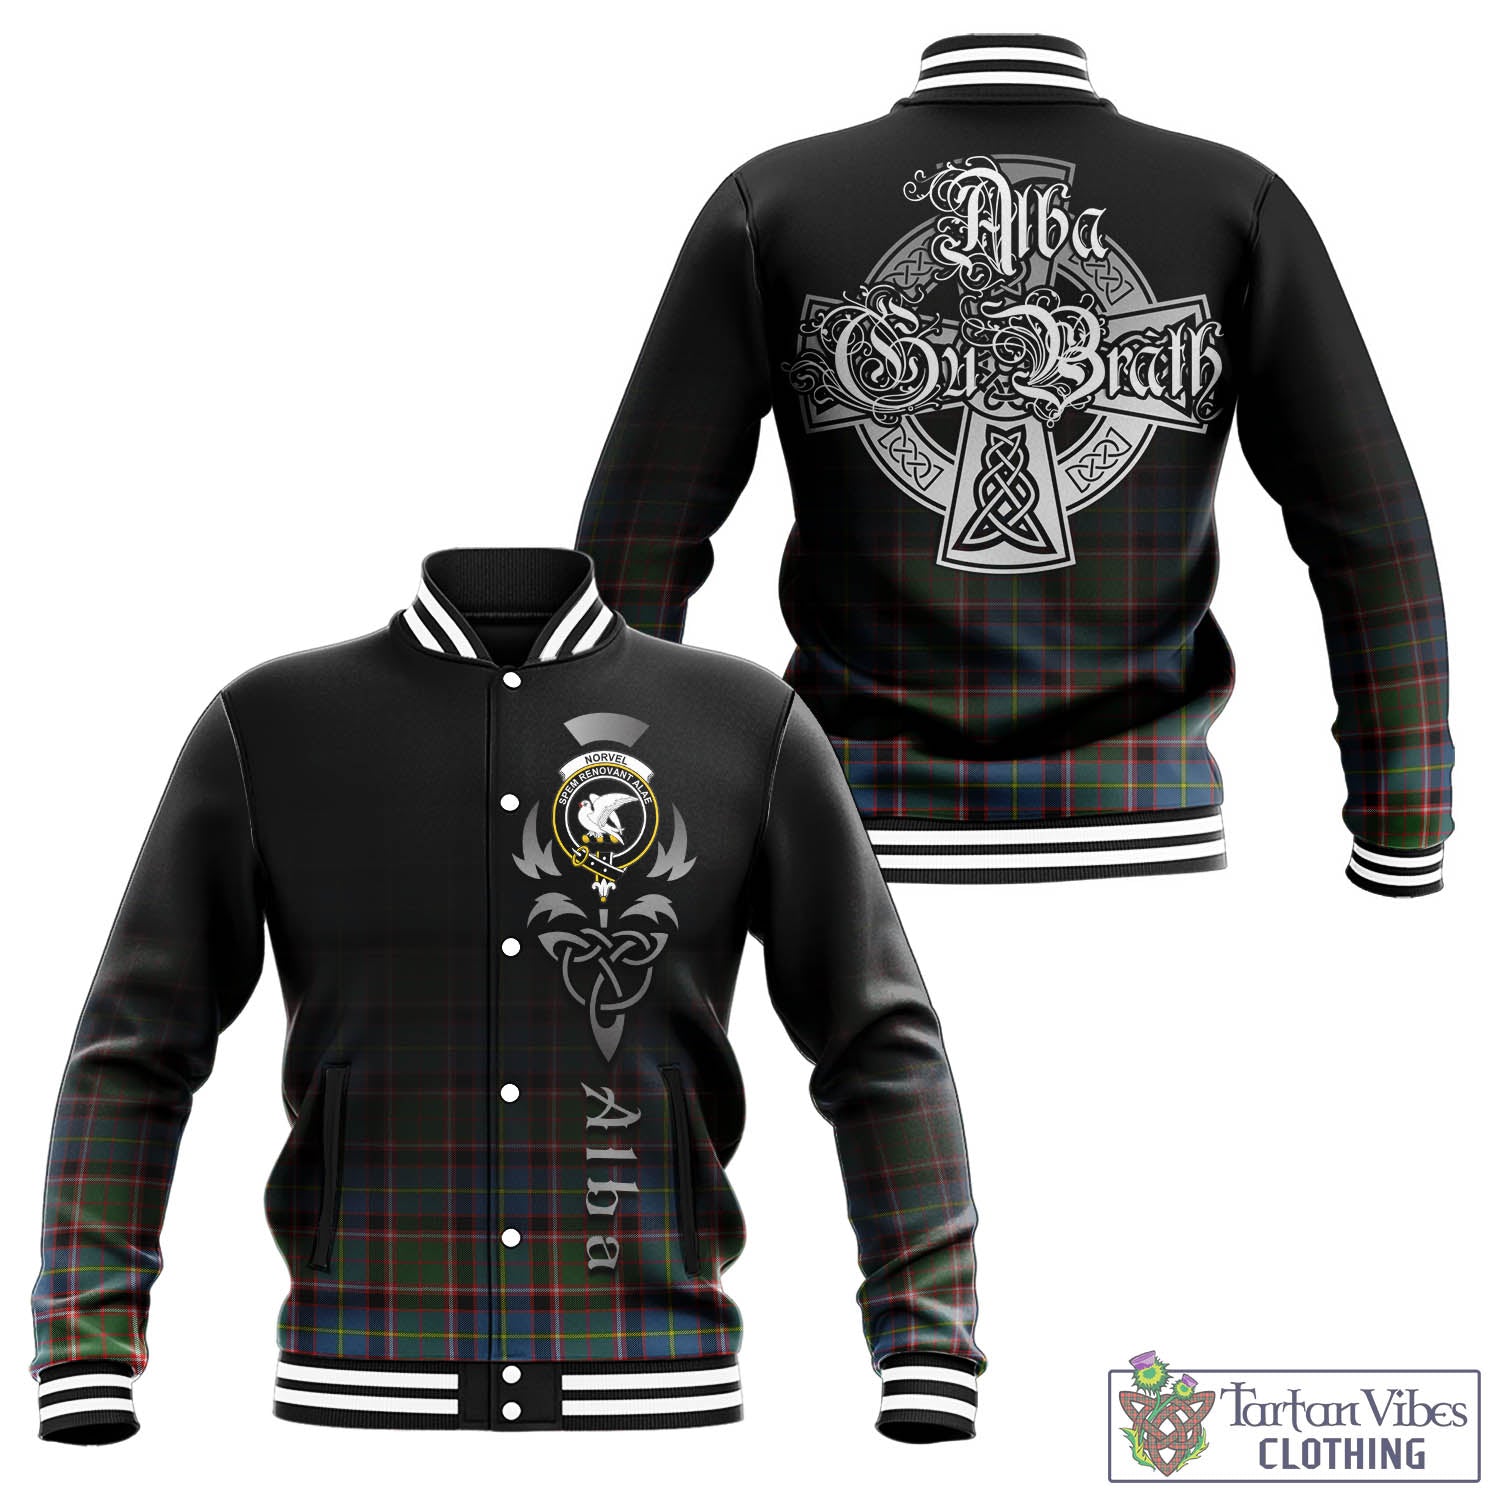 Tartan Vibes Clothing Norvel Tartan Baseball Jacket Featuring Alba Gu Brath Family Crest Celtic Inspired